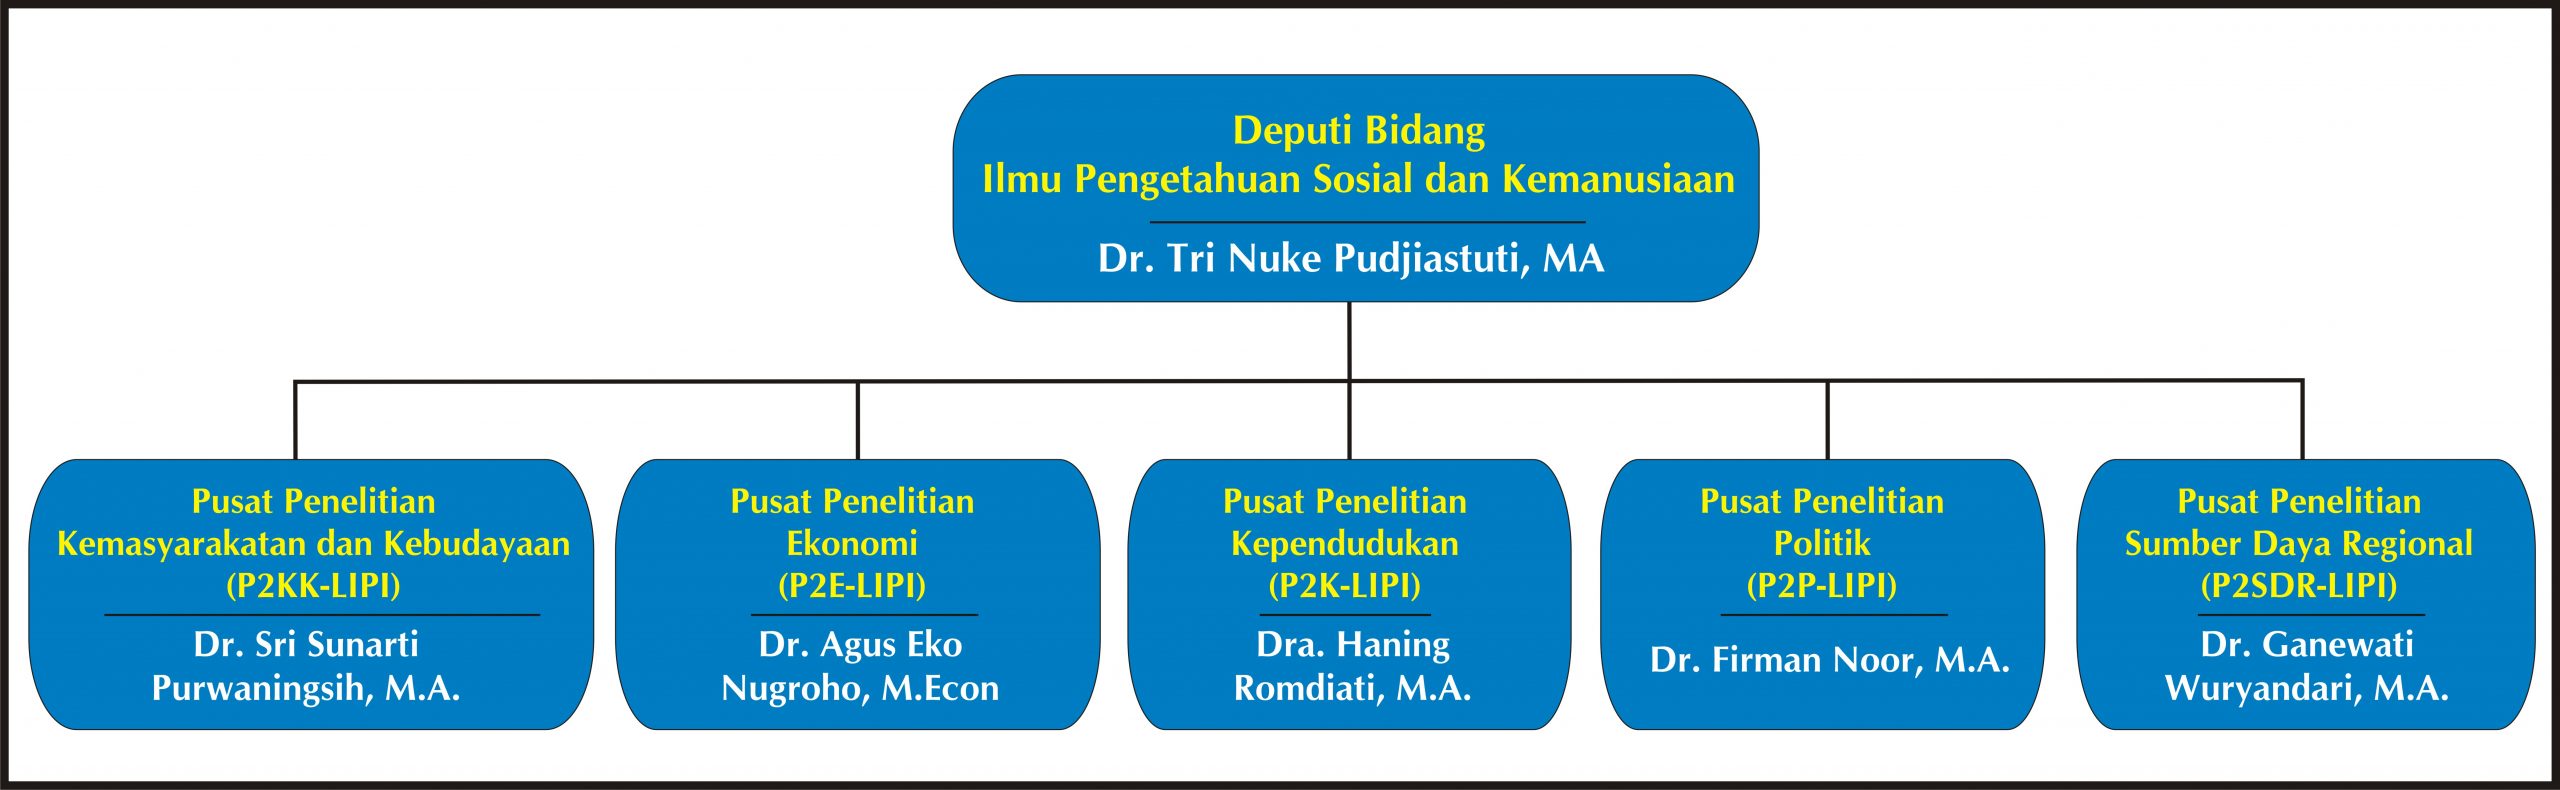 Struktur Organisasi Deputi IPSK 2018